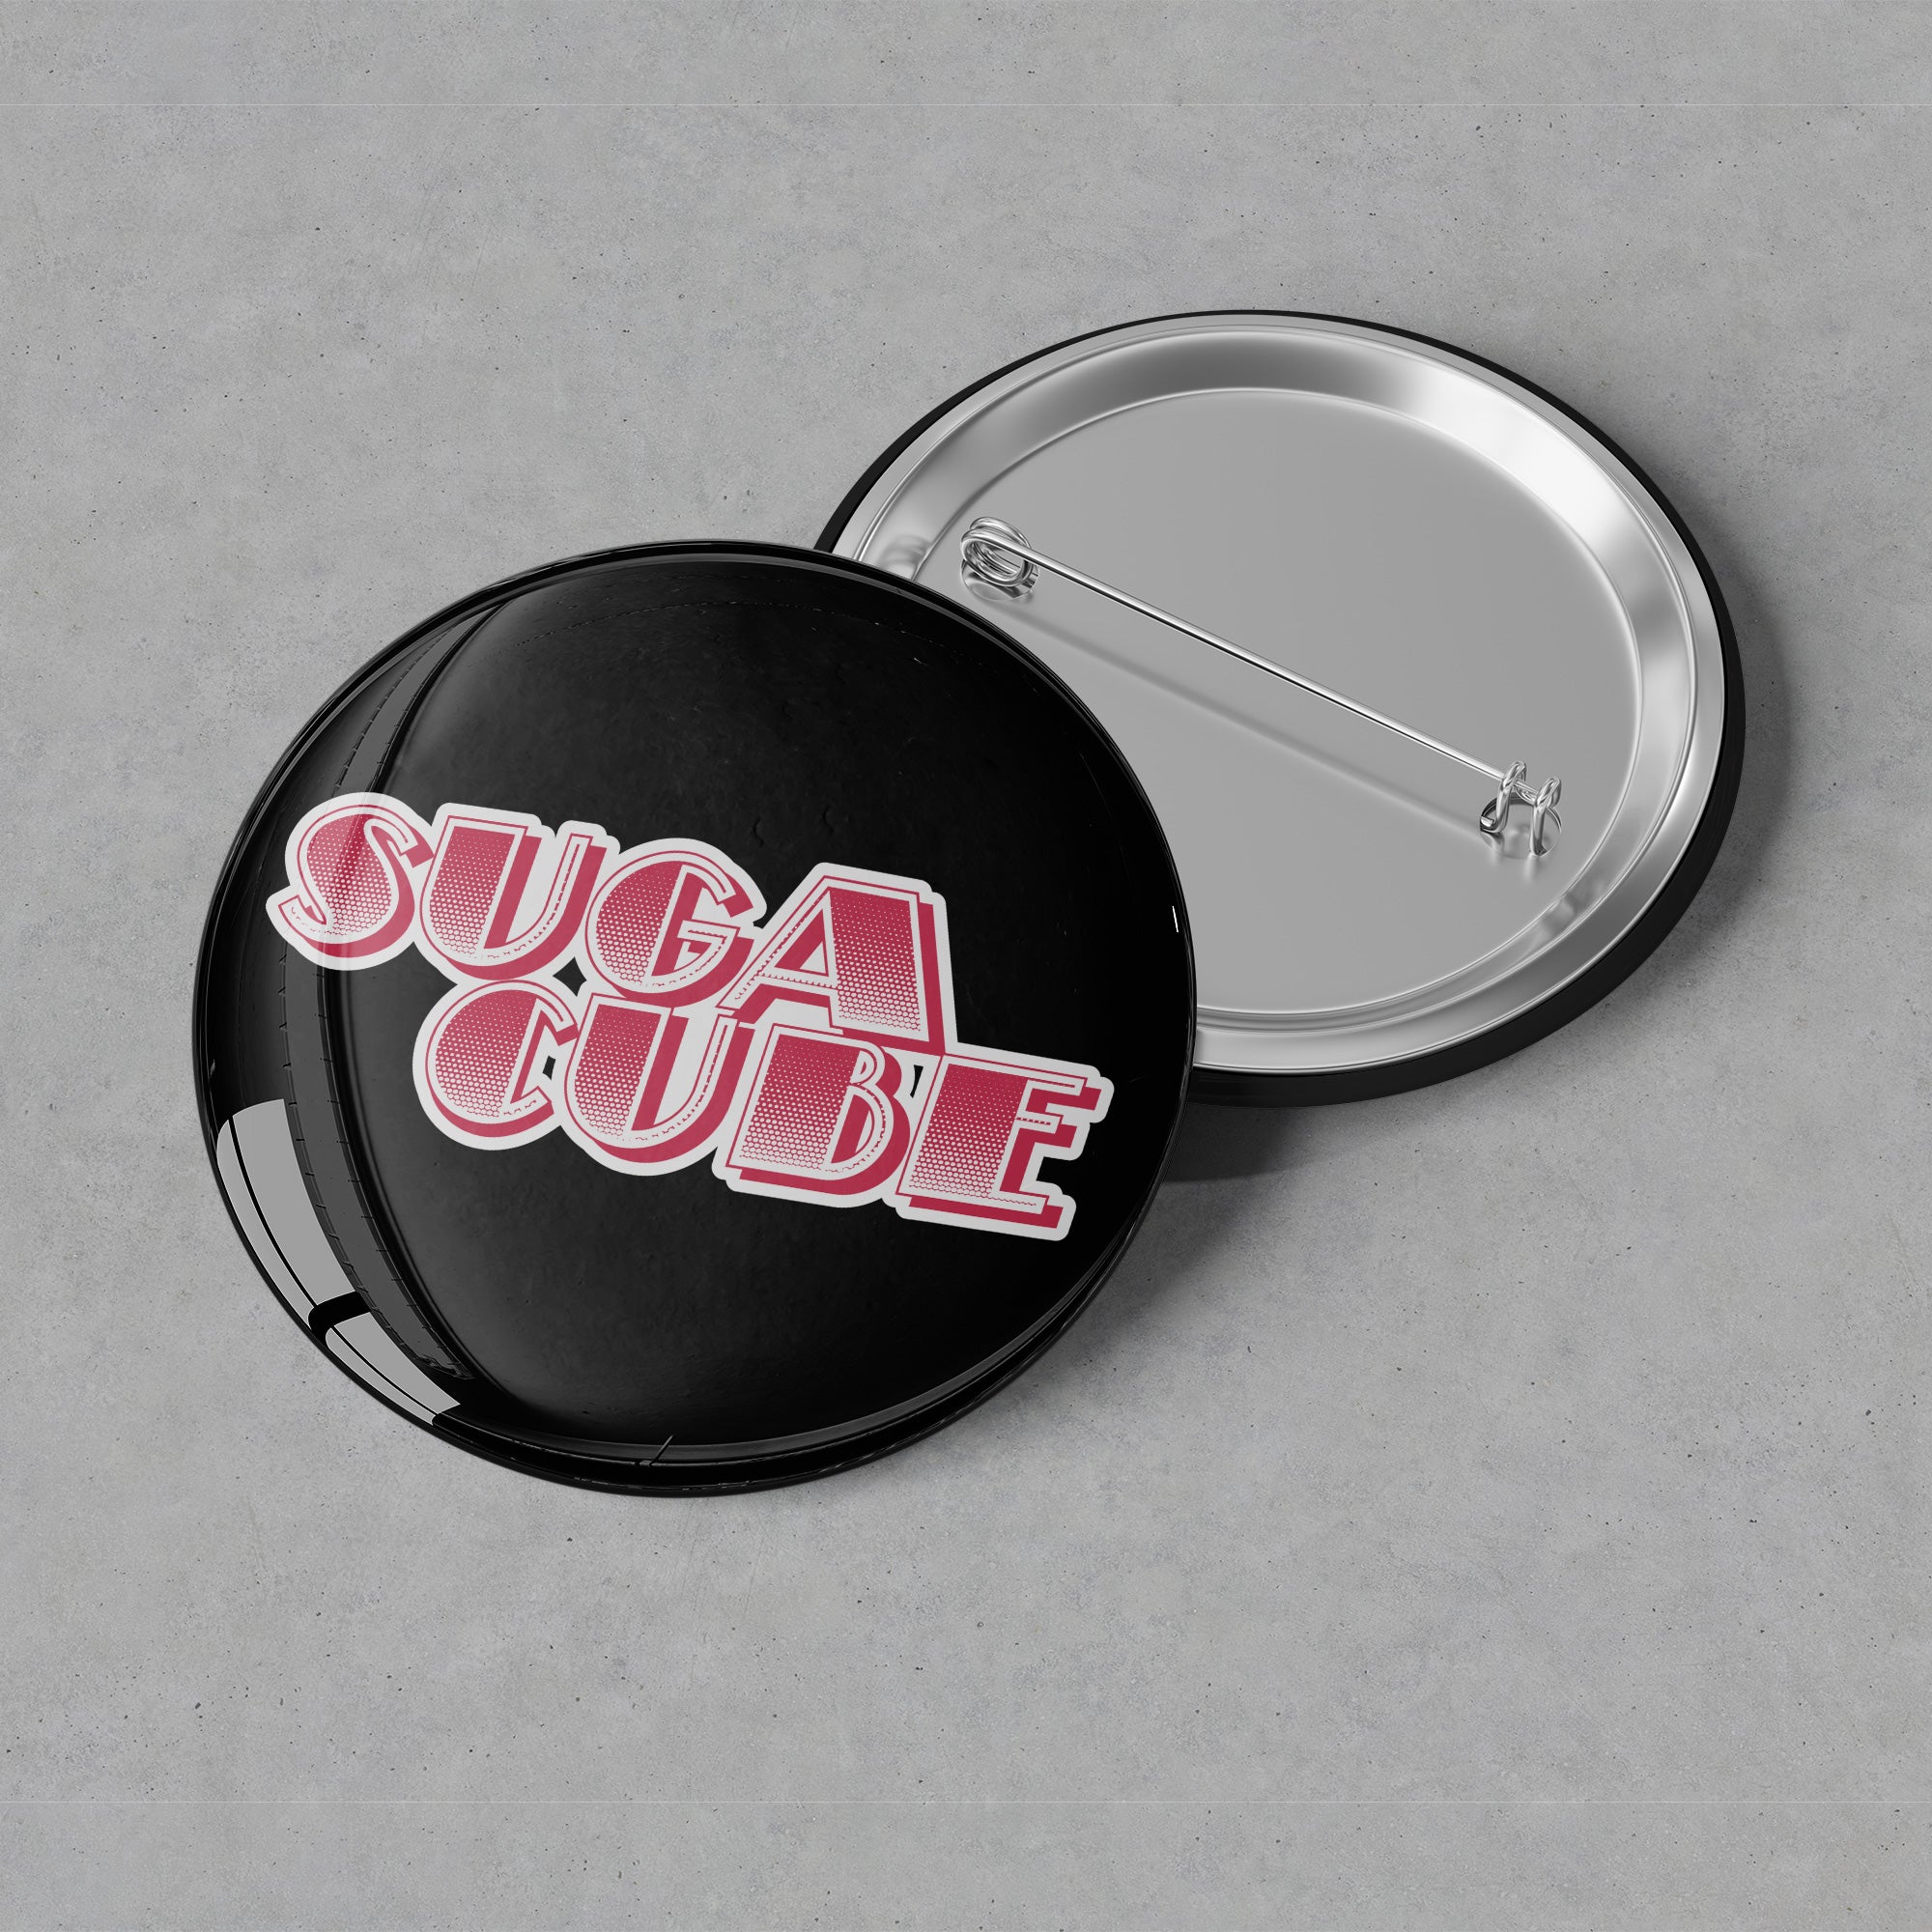 Suga Cube - Name Button